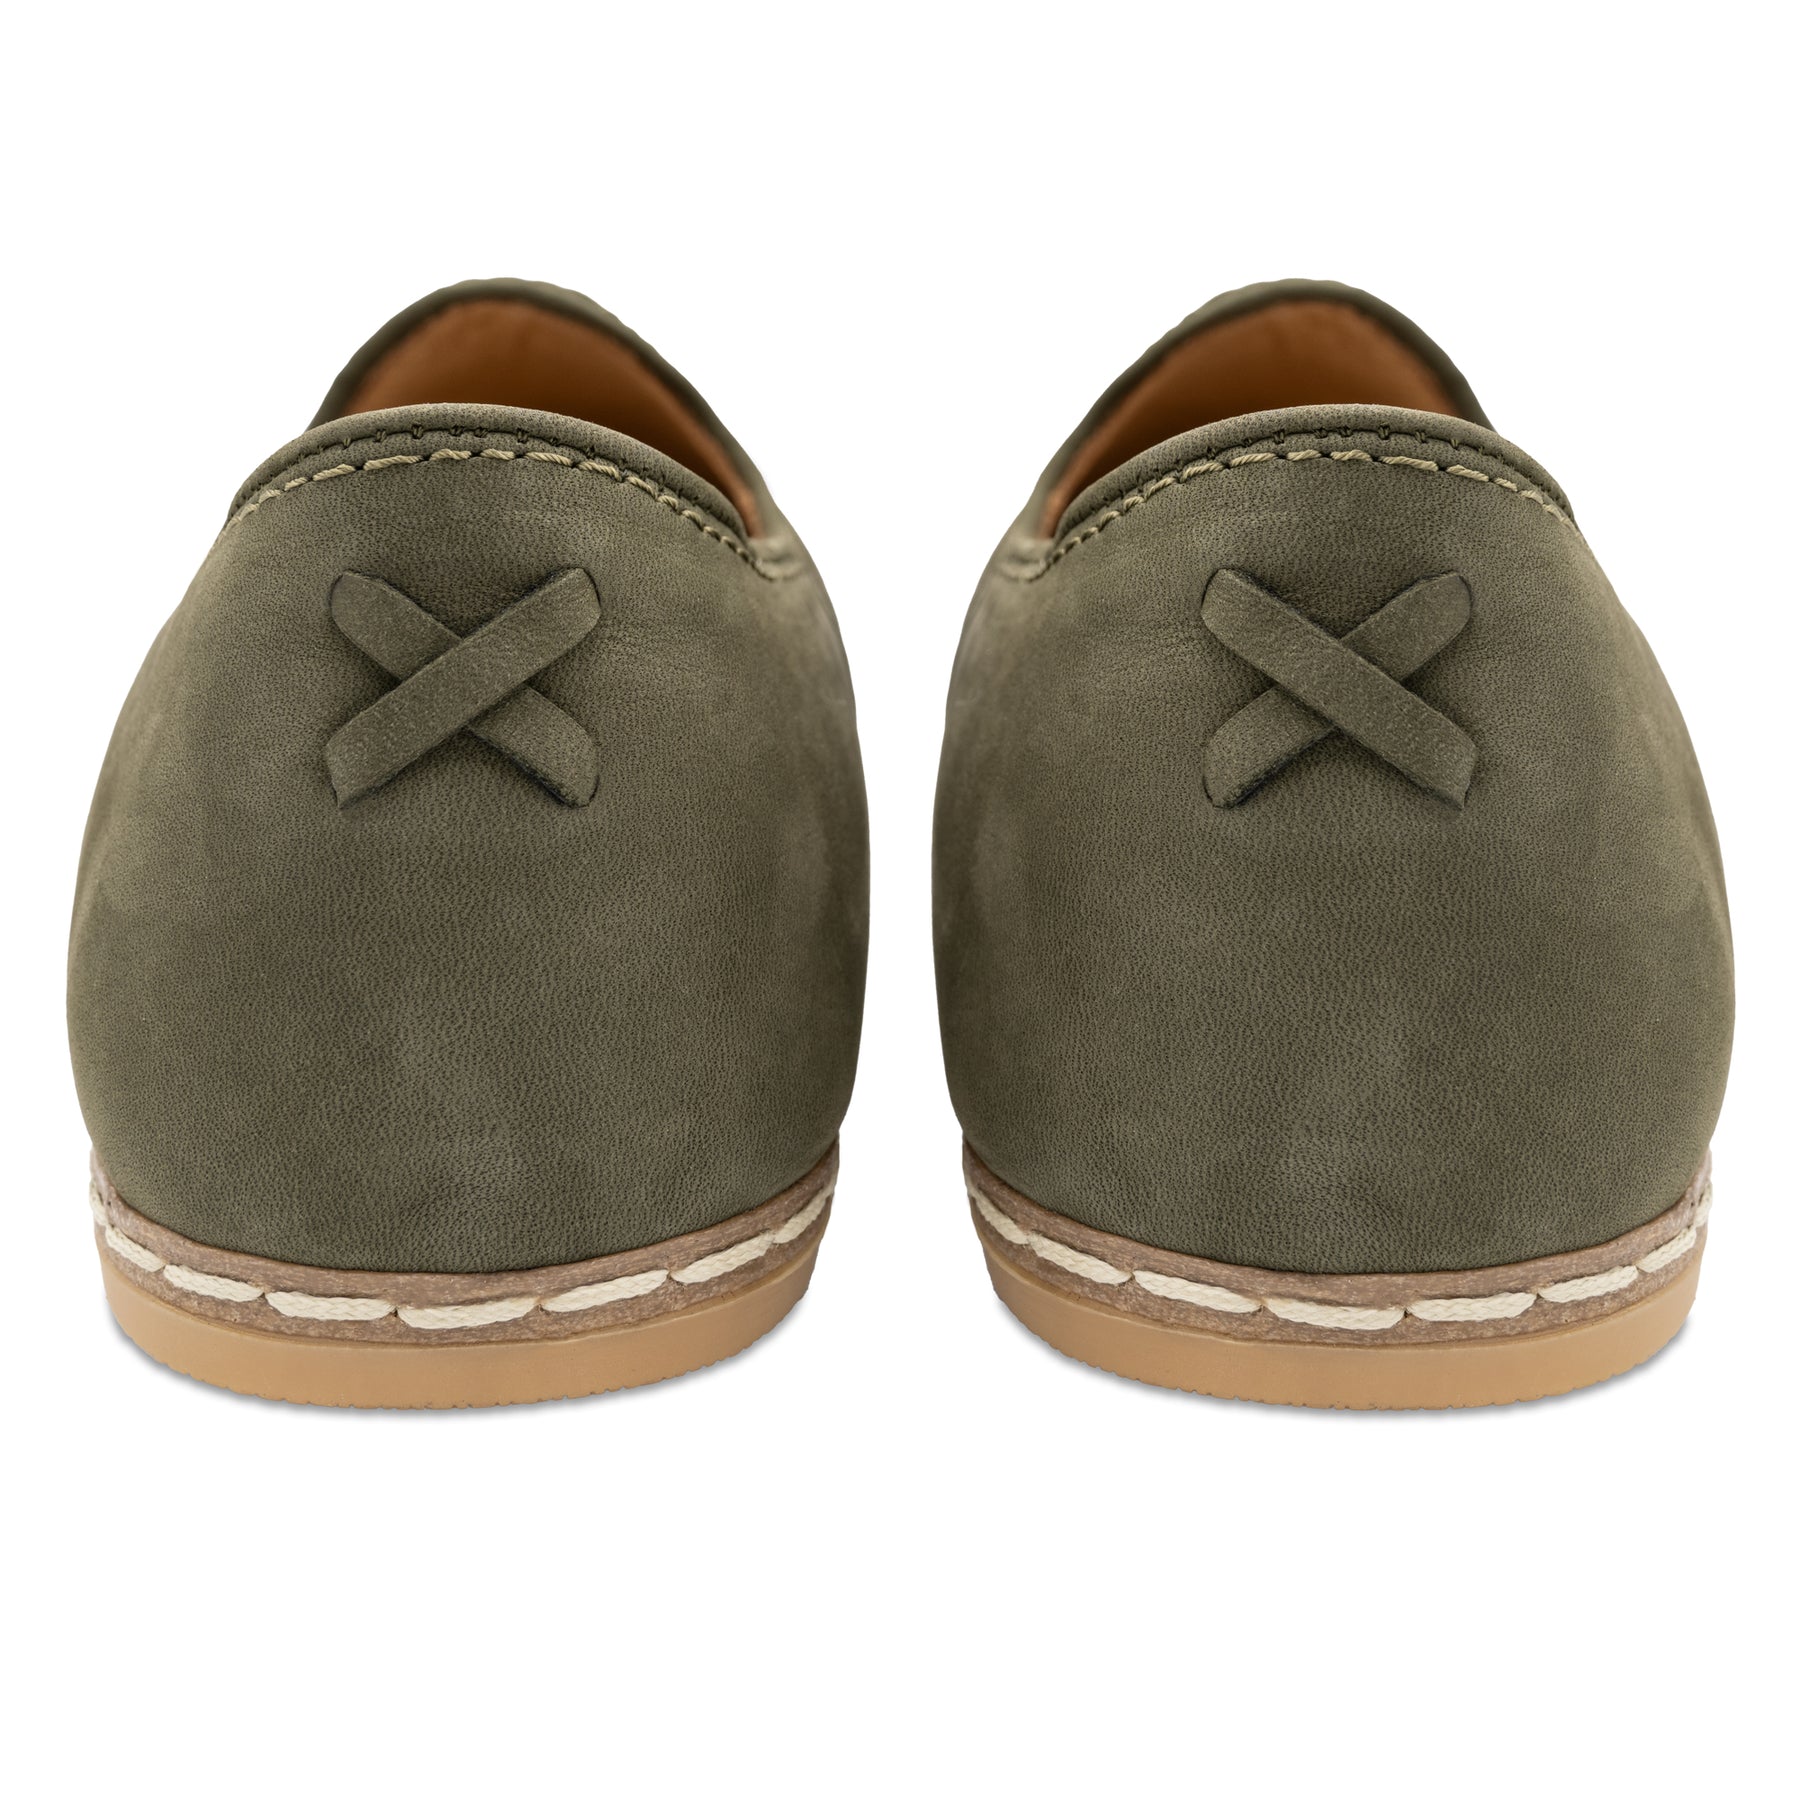 Olive Suede Slip Ons for Men - Charix Shoes